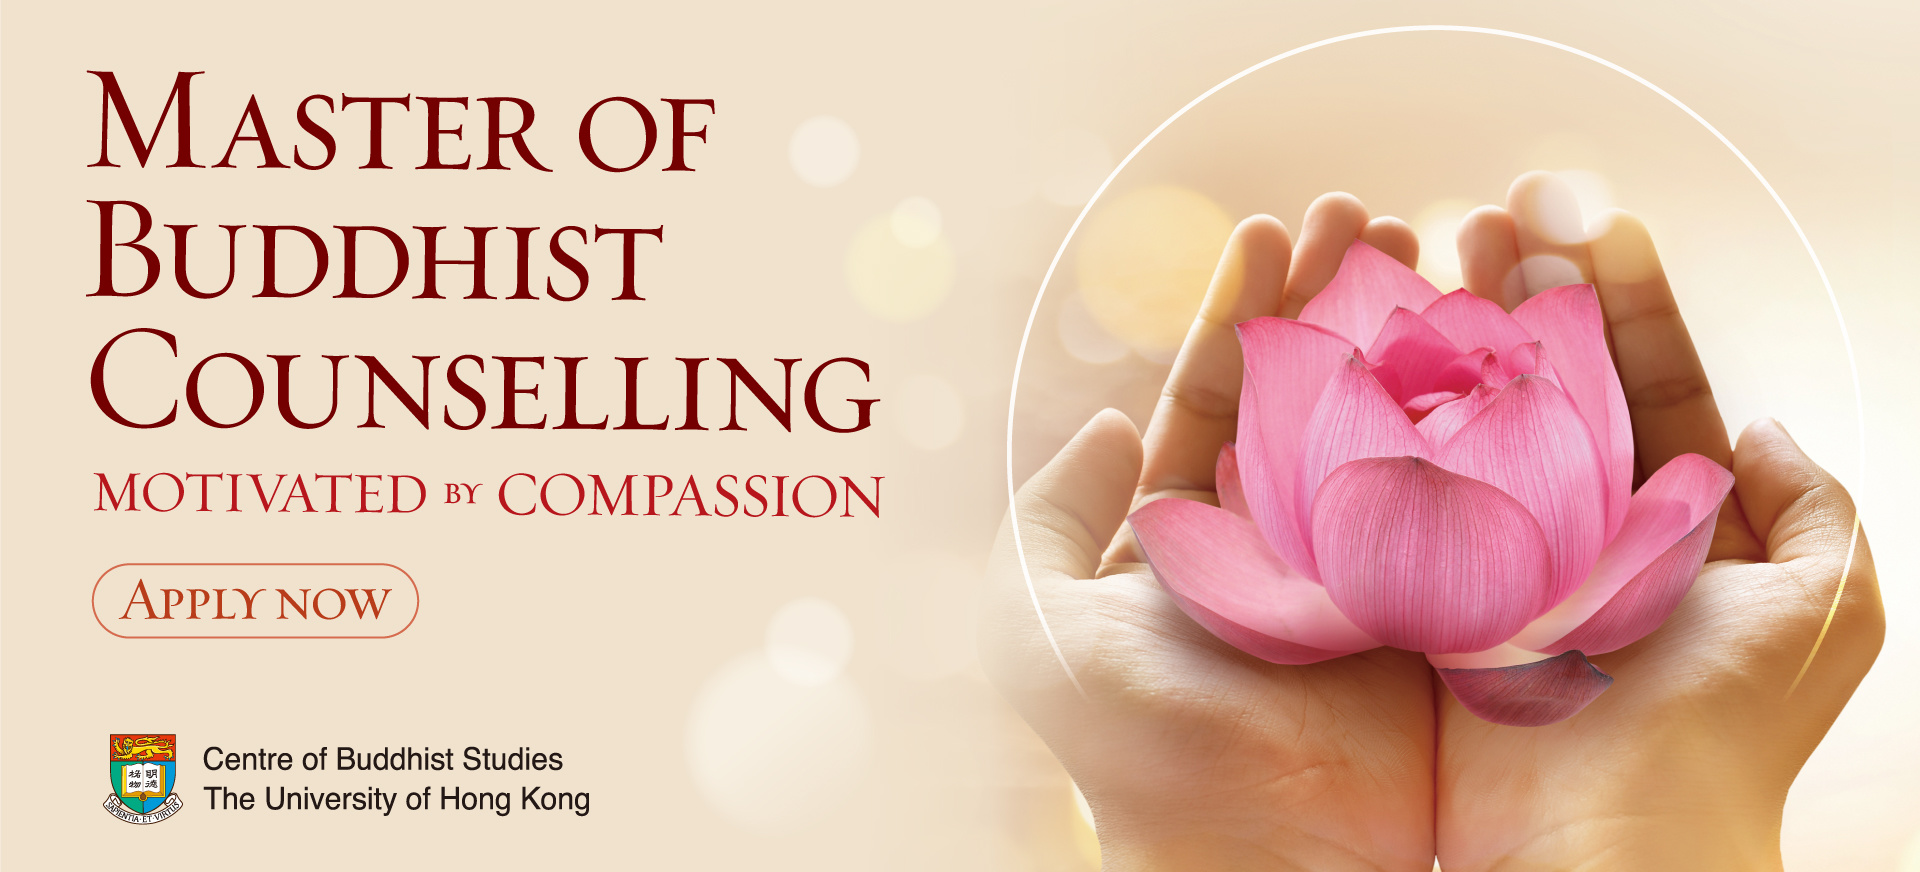 Master of Buddhist Counselling 2018-19